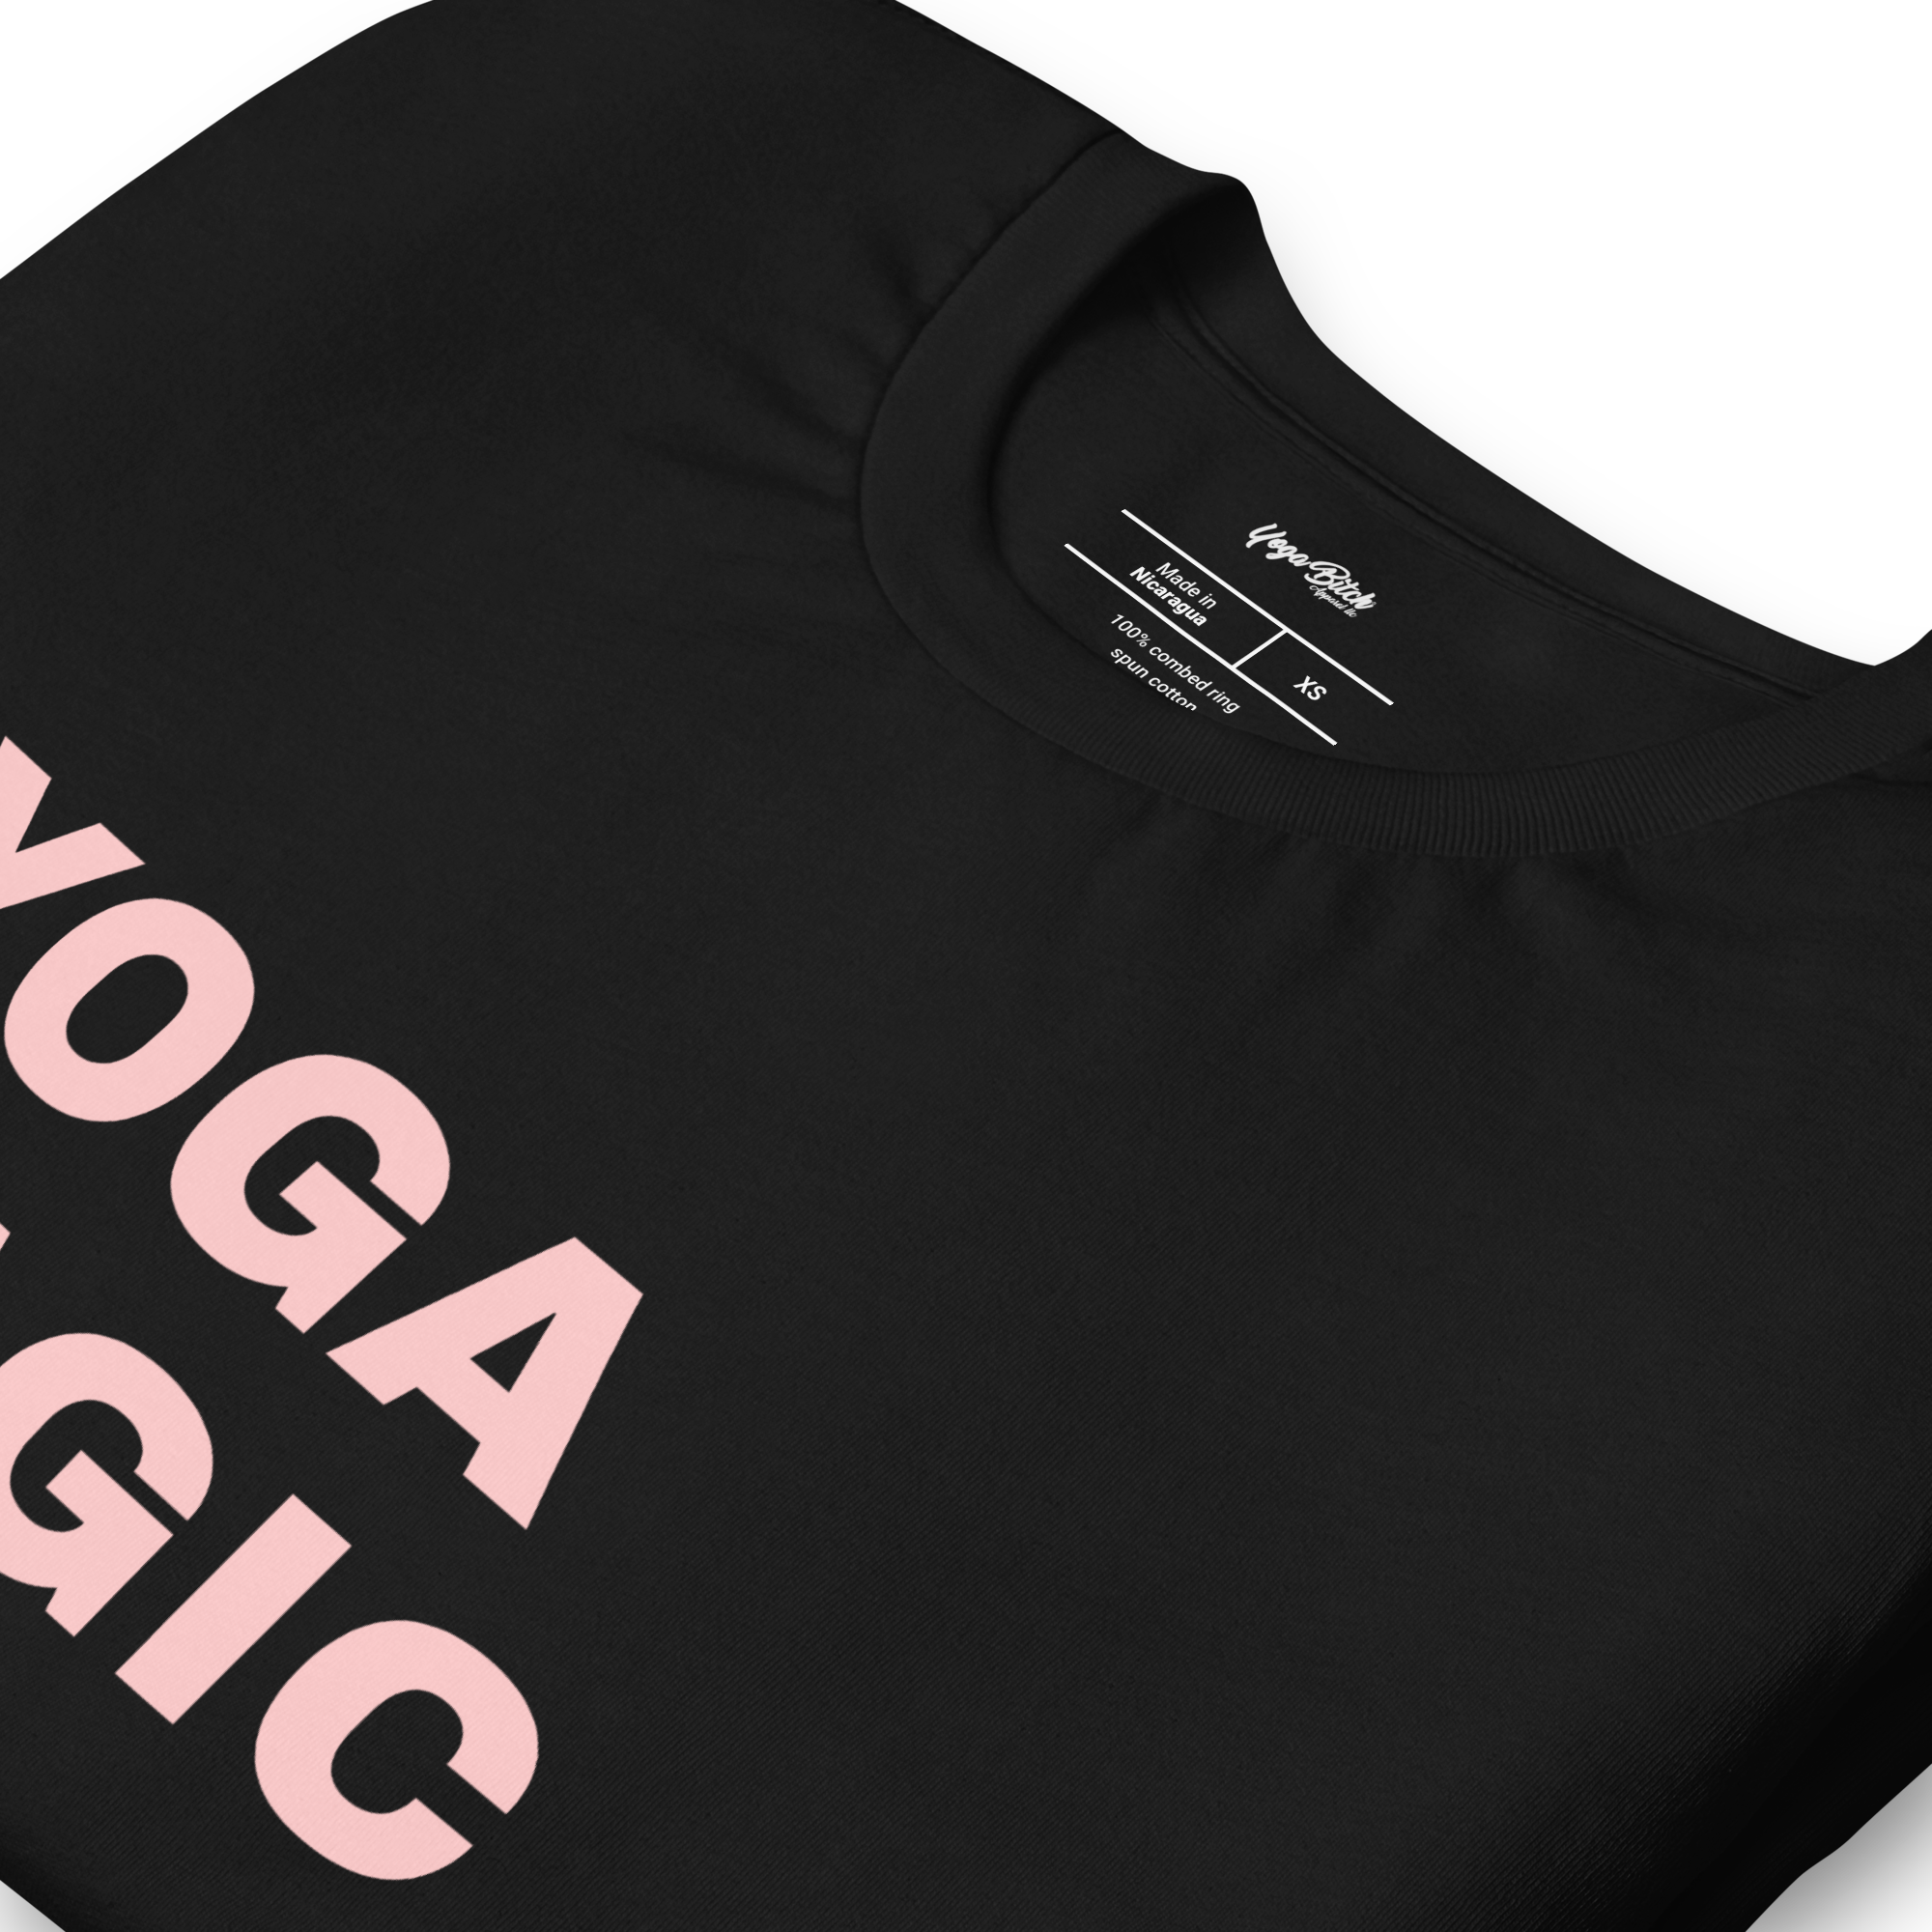 Yoga Magic Tee - Yoga Bitch